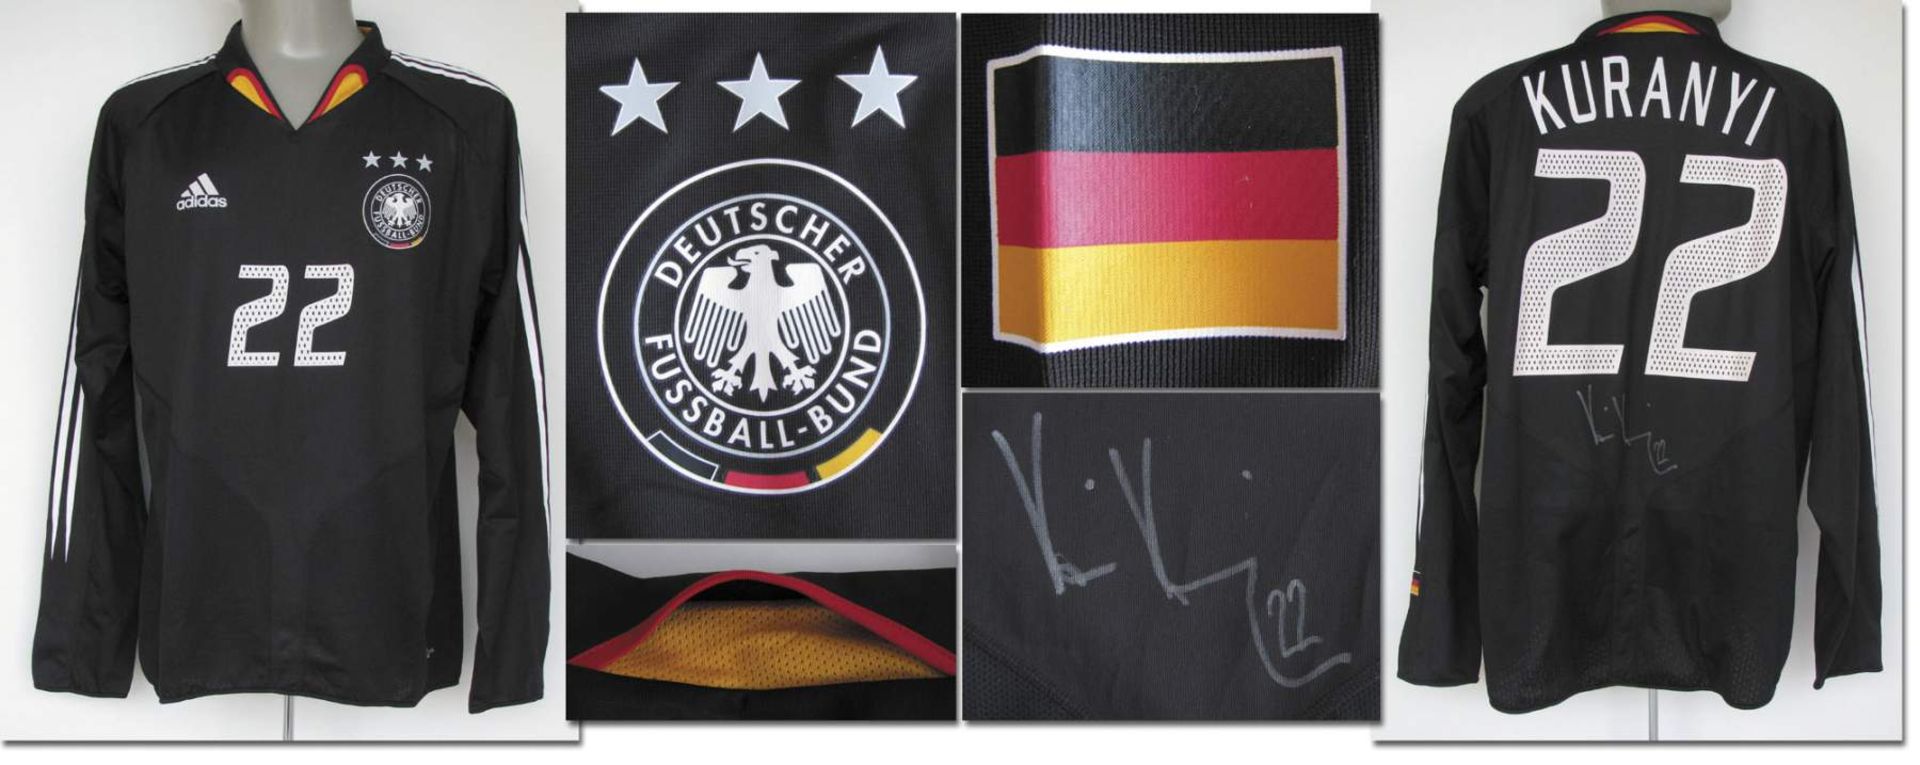 match worn fooball Shirt Germany 2003 - Original match worn shirt Germany with number 22. Worn by